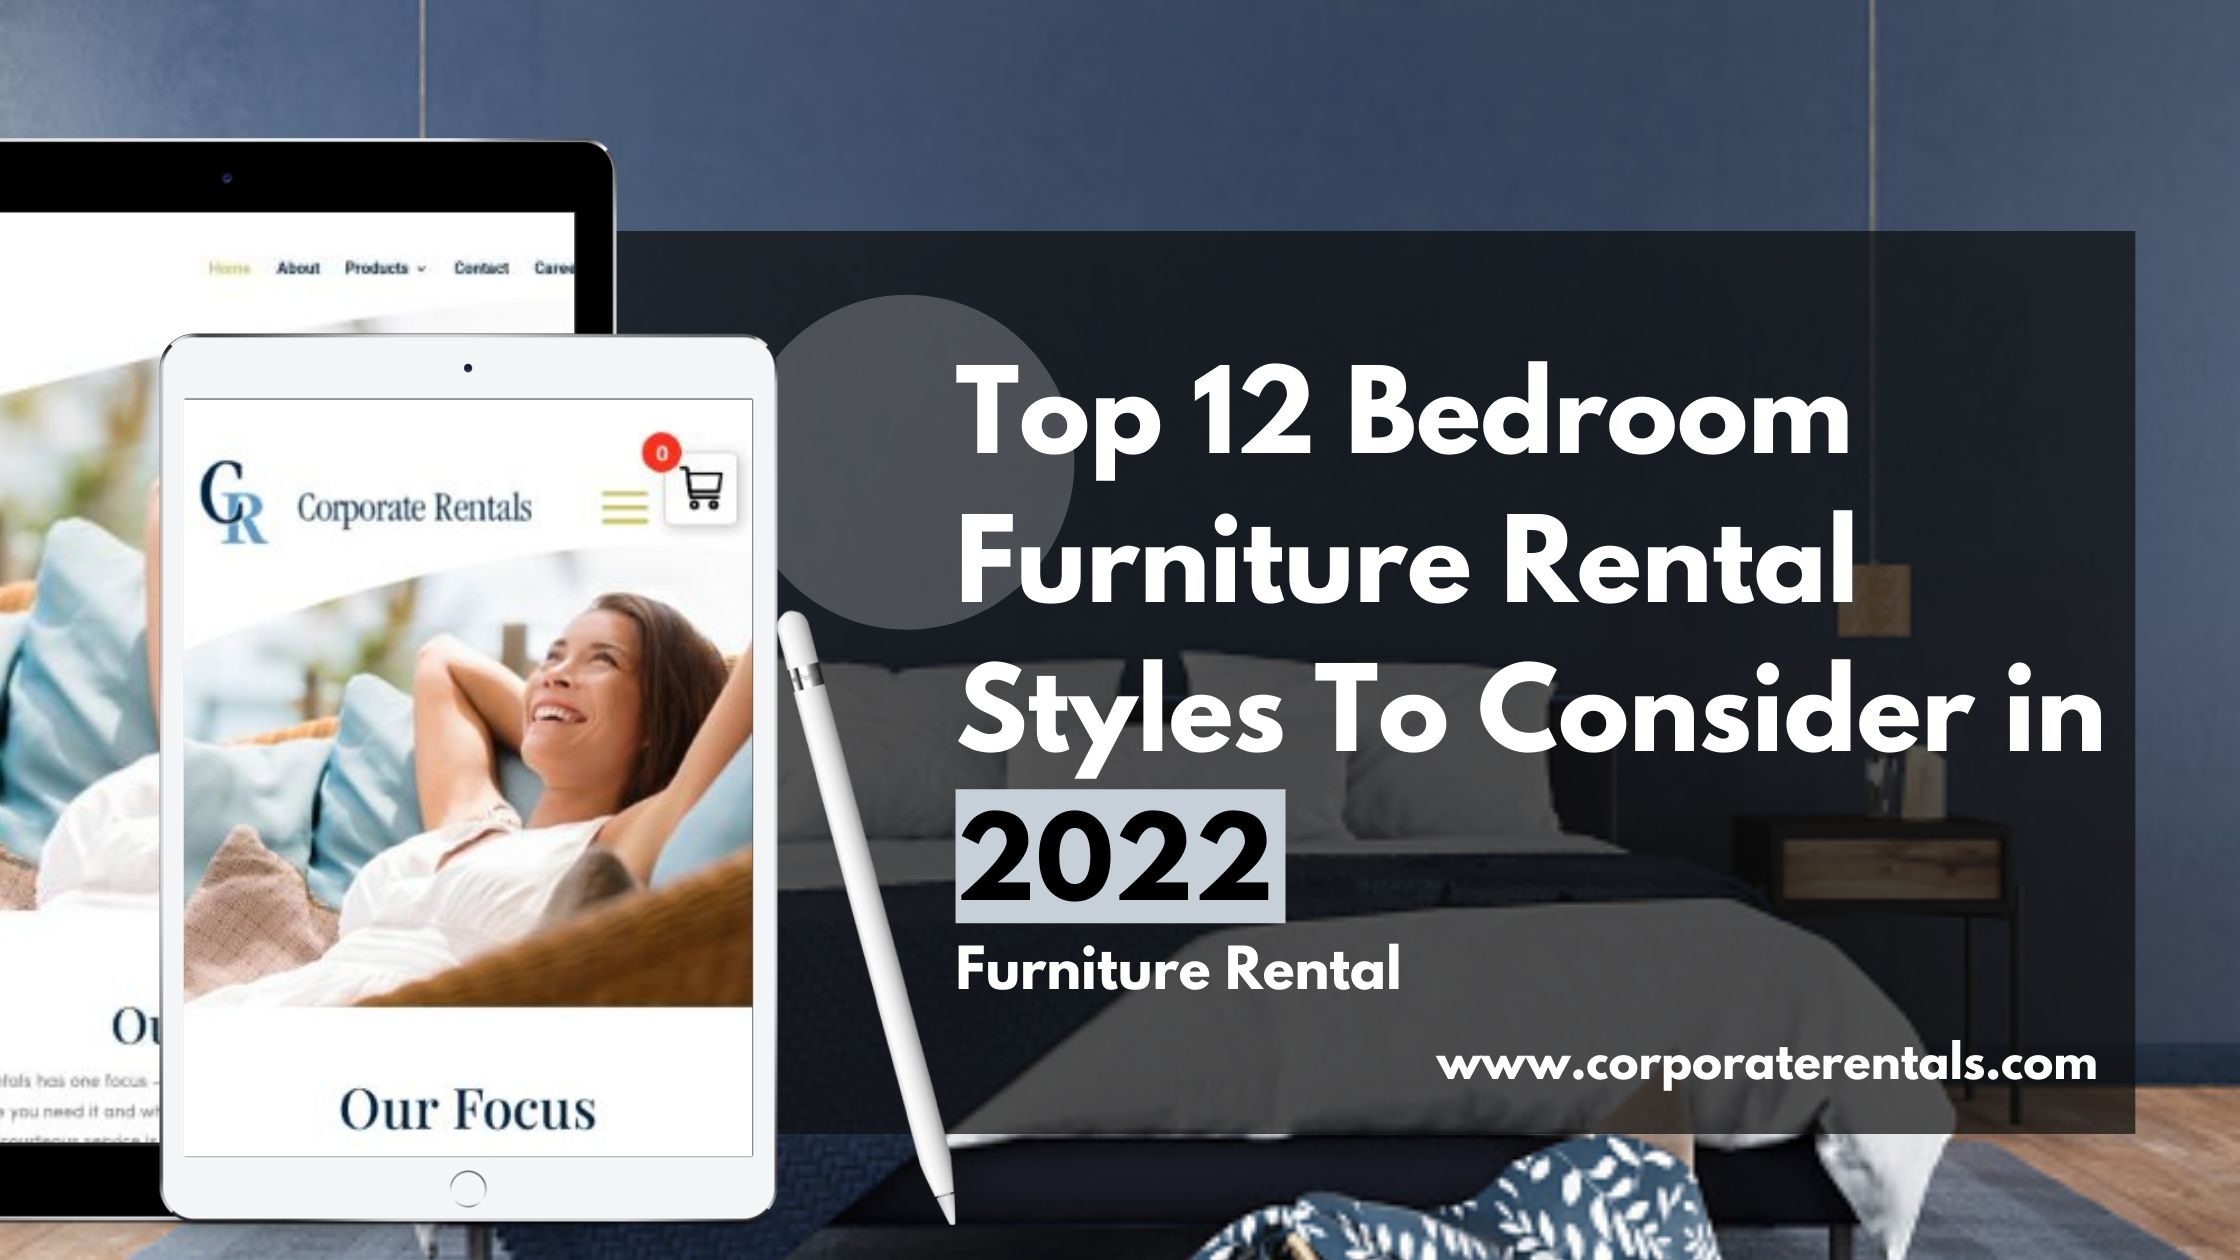 Top 12 Bedroom Furniture Rental Styles to Consider in 2022